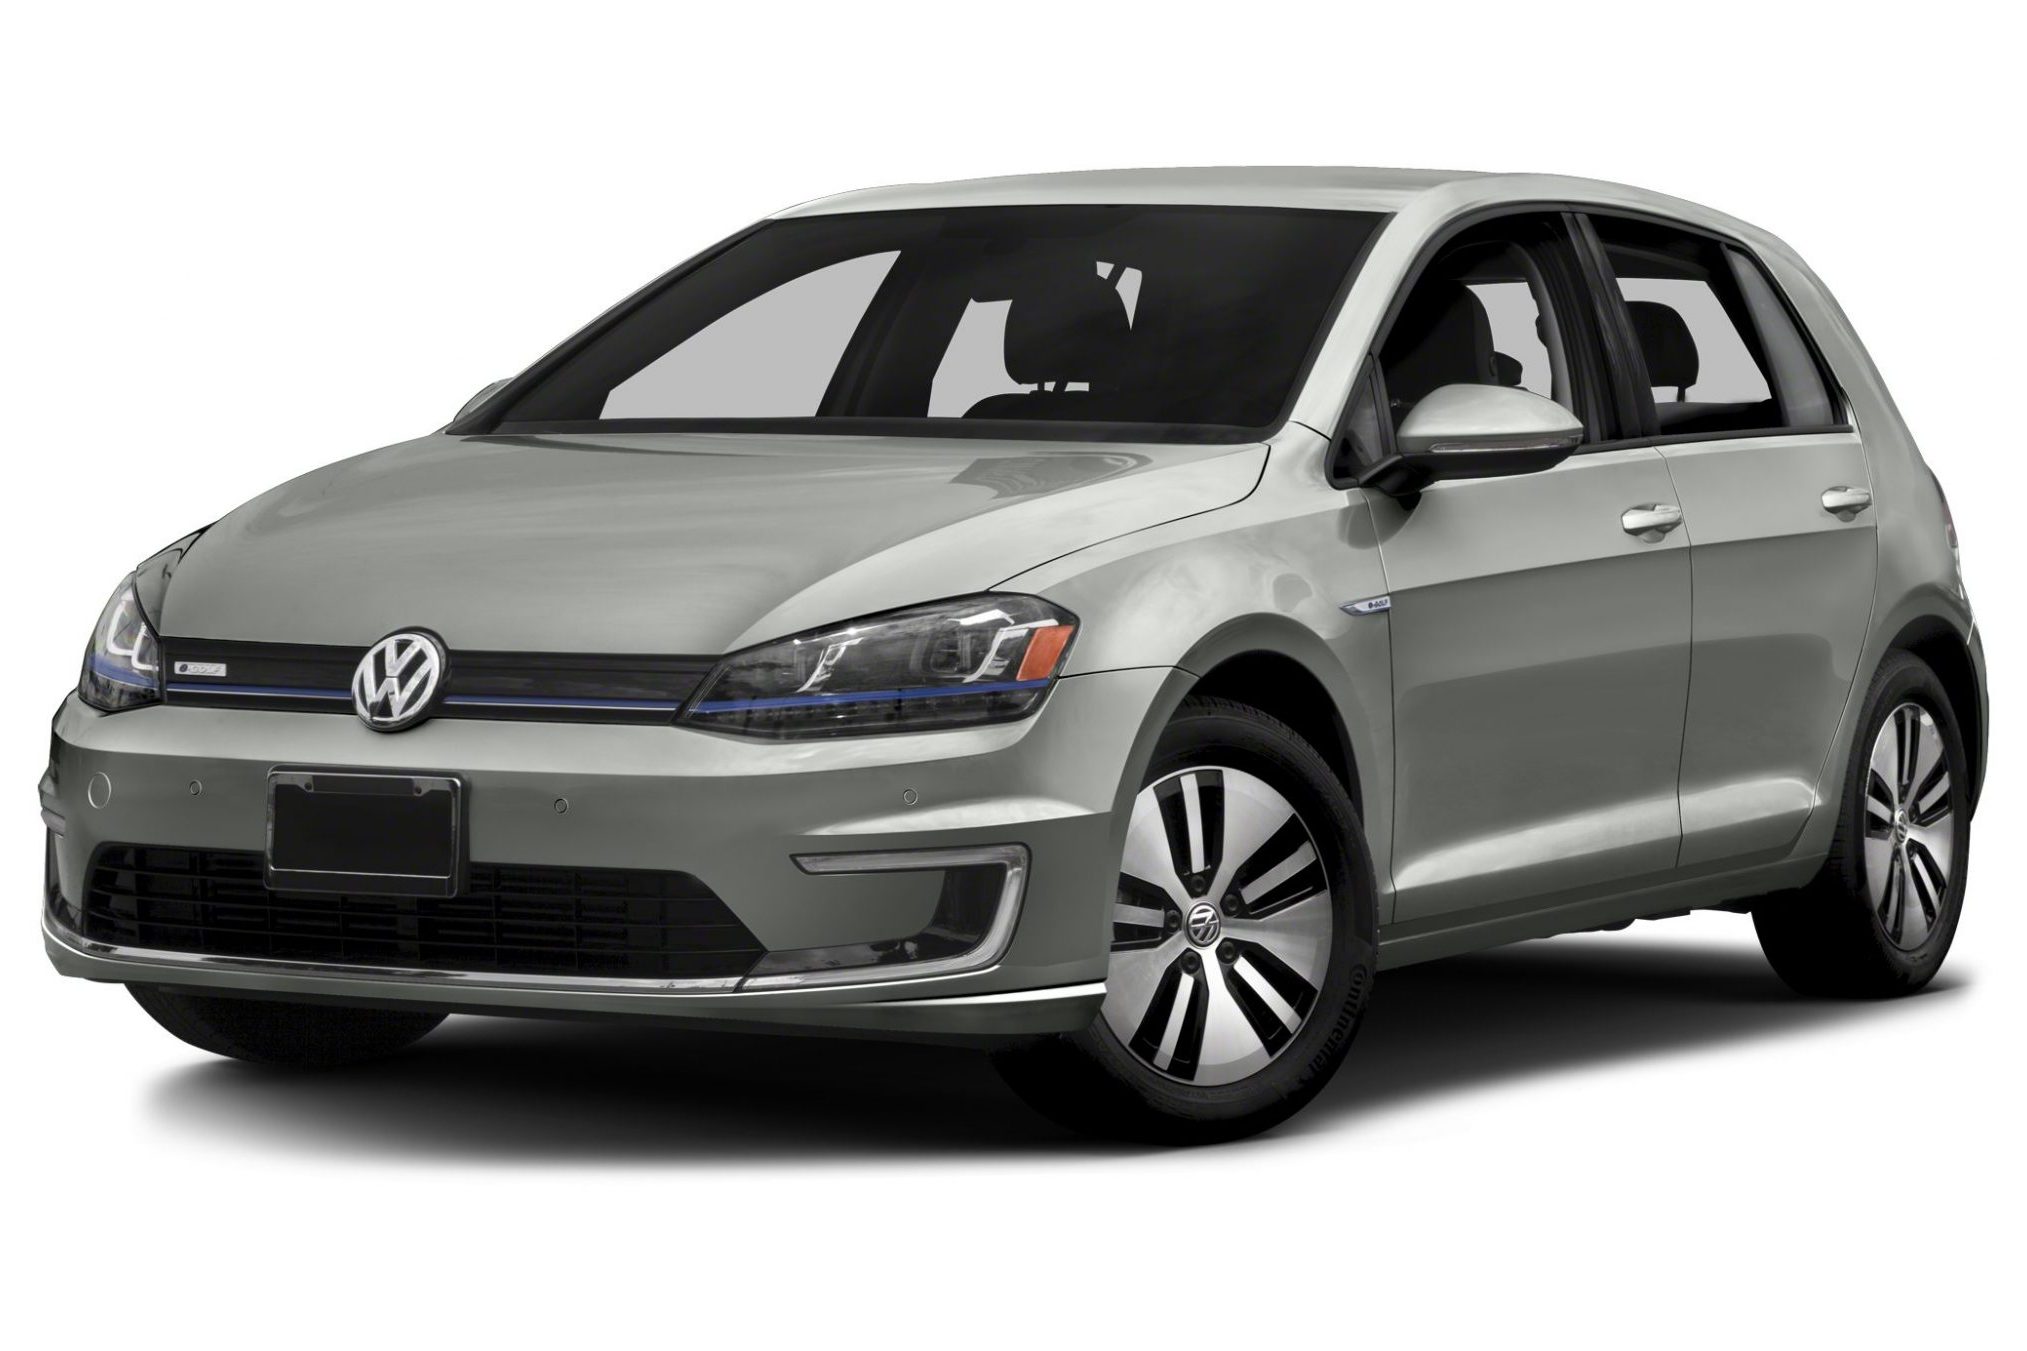 VW e-Golf 2015 specifikacie